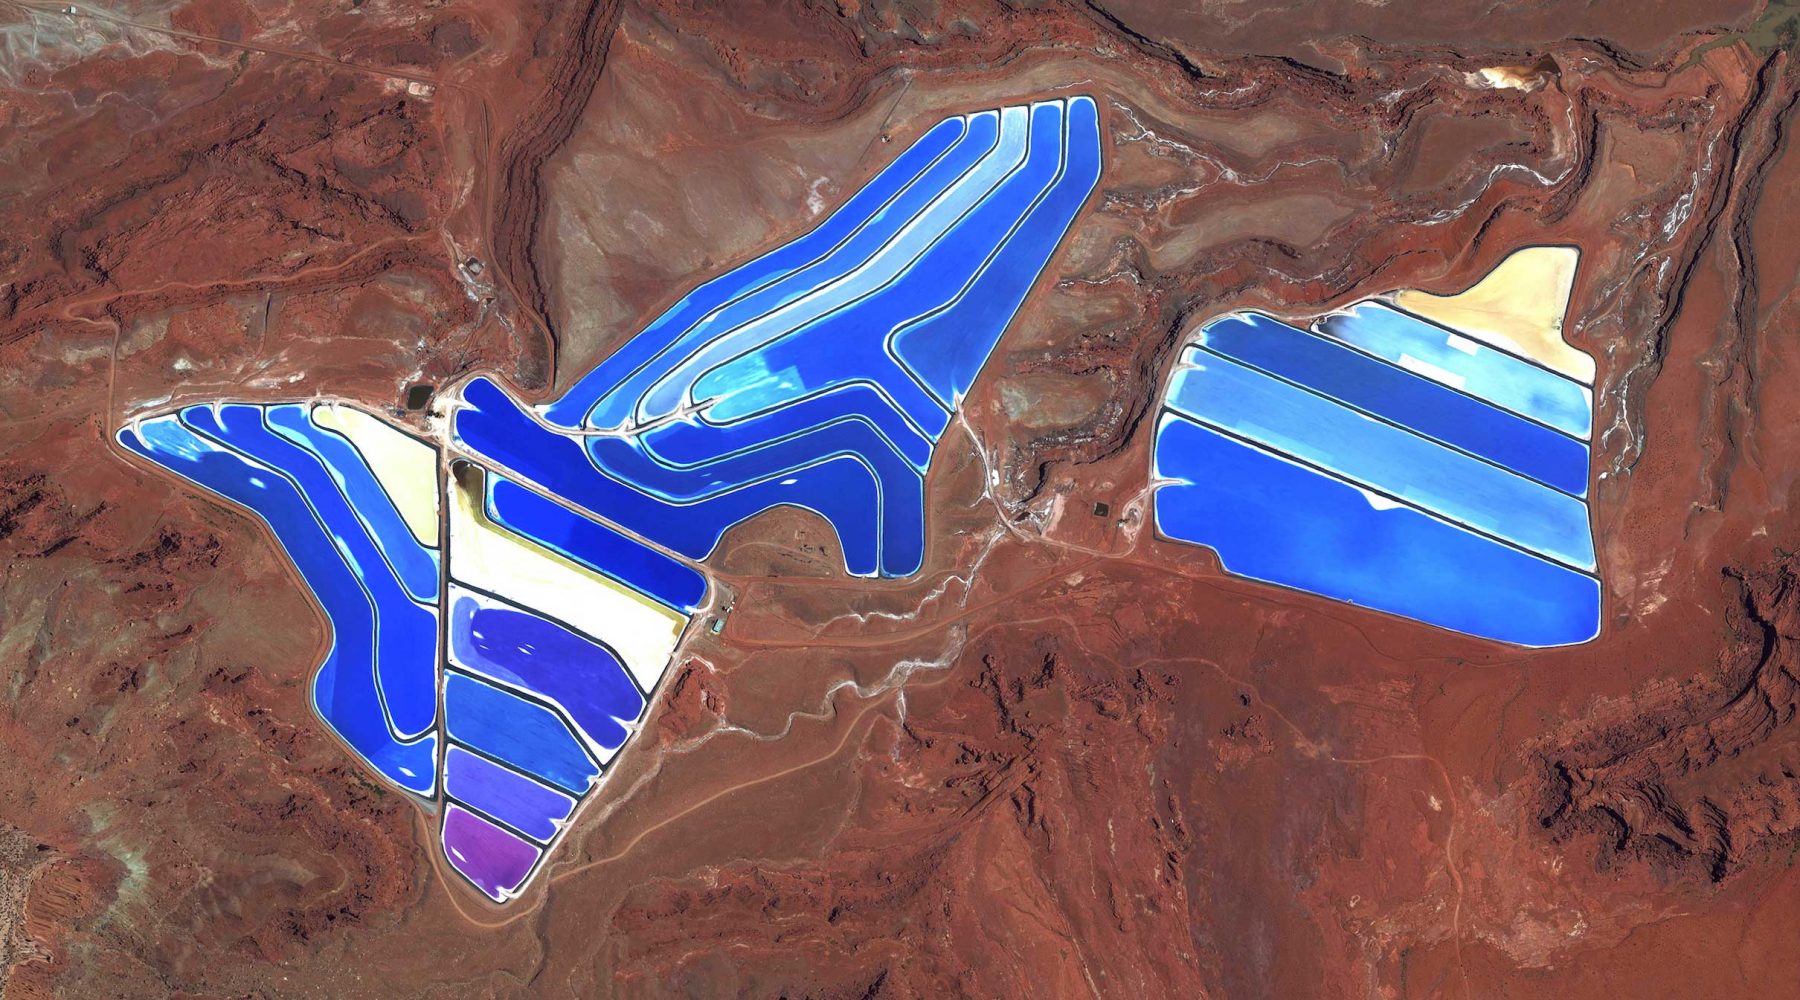 Intrepid Potash Mine Satellite Photo